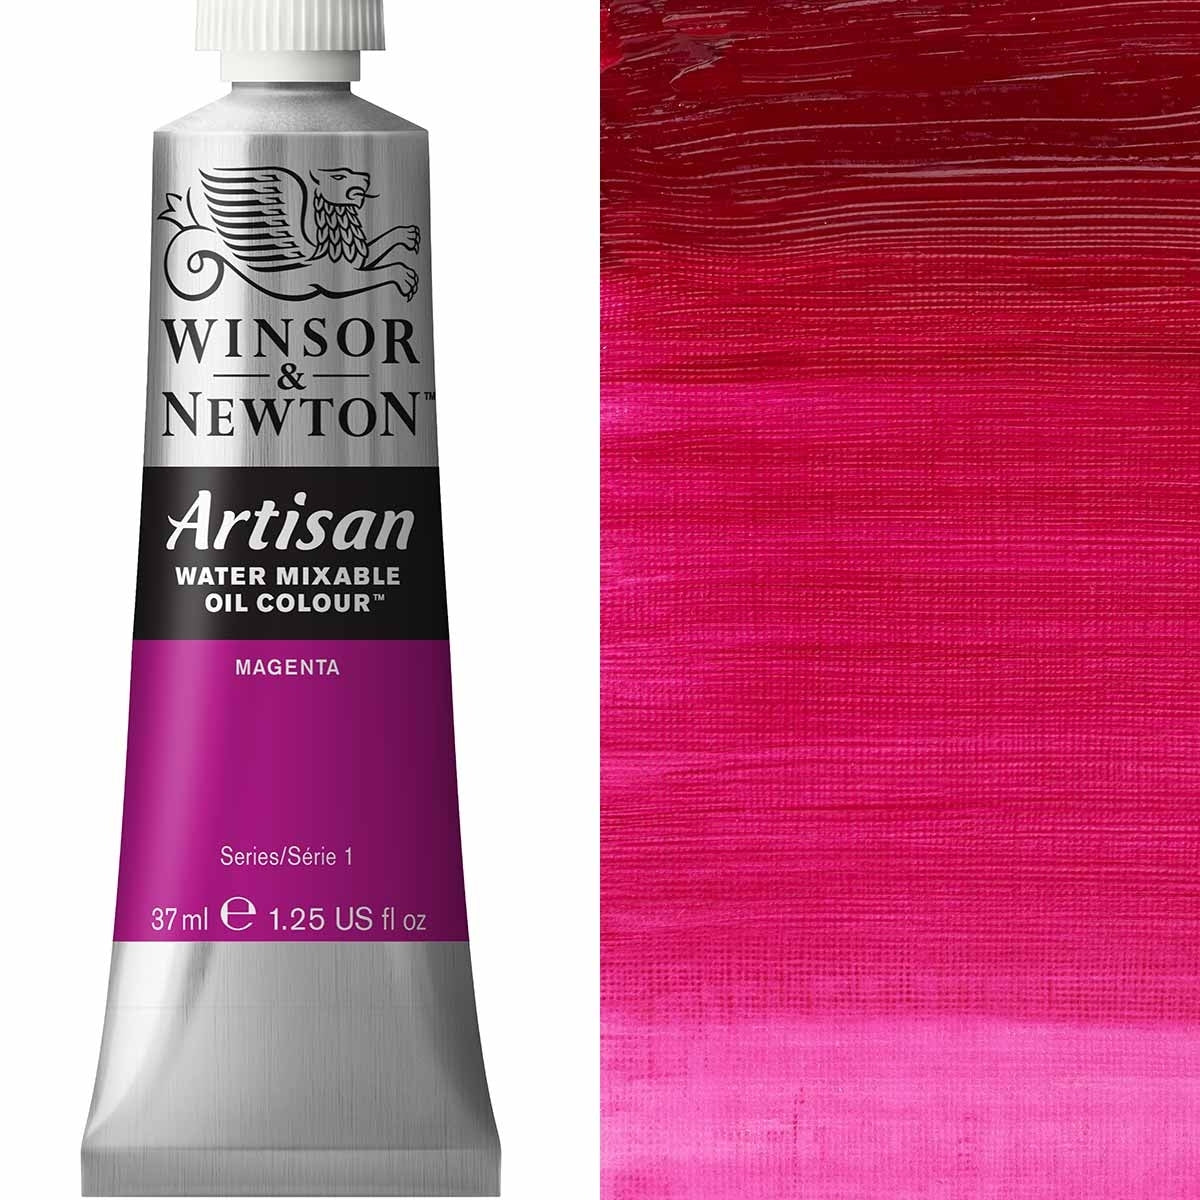 Winsor and Newton - Artisan Oil Colour Watermixable - 37ml - Magenta